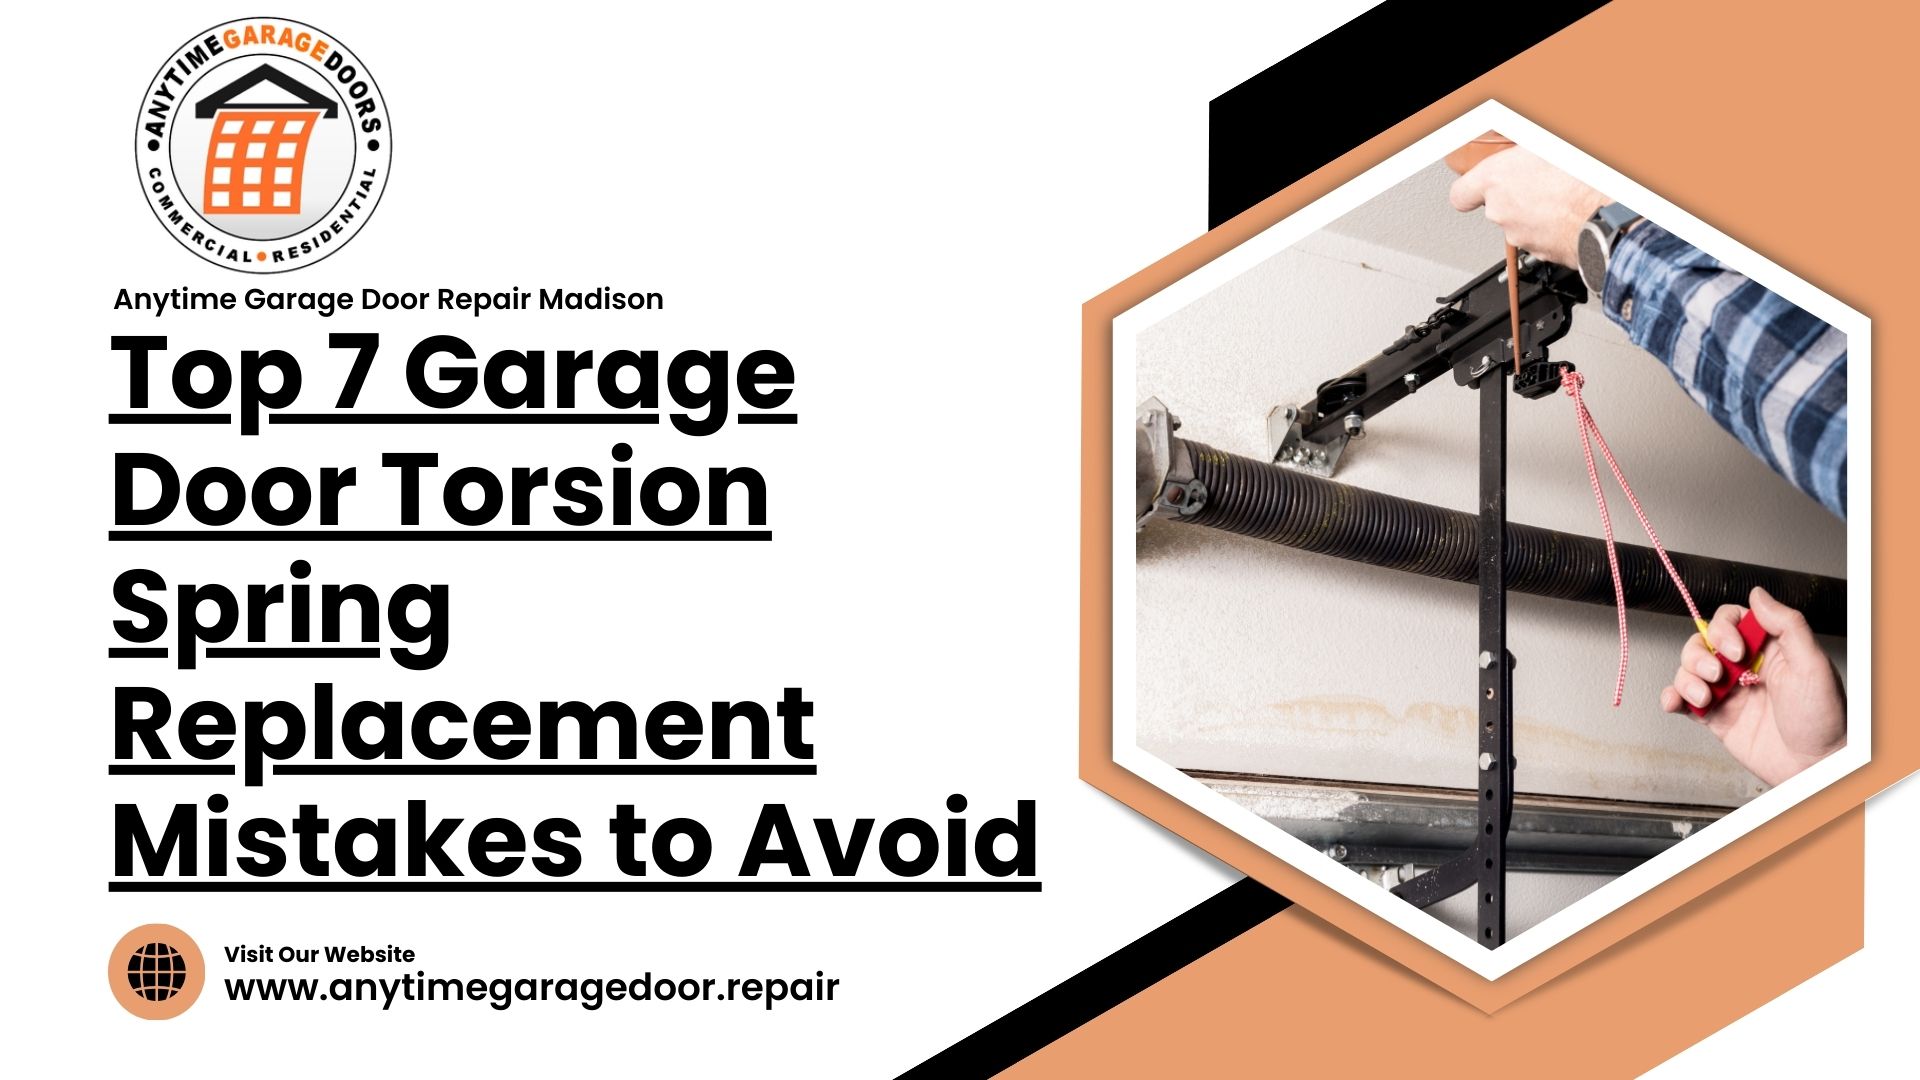 Top 7 Garage Door Torsion Spring Replacement Mistakes to Avoid